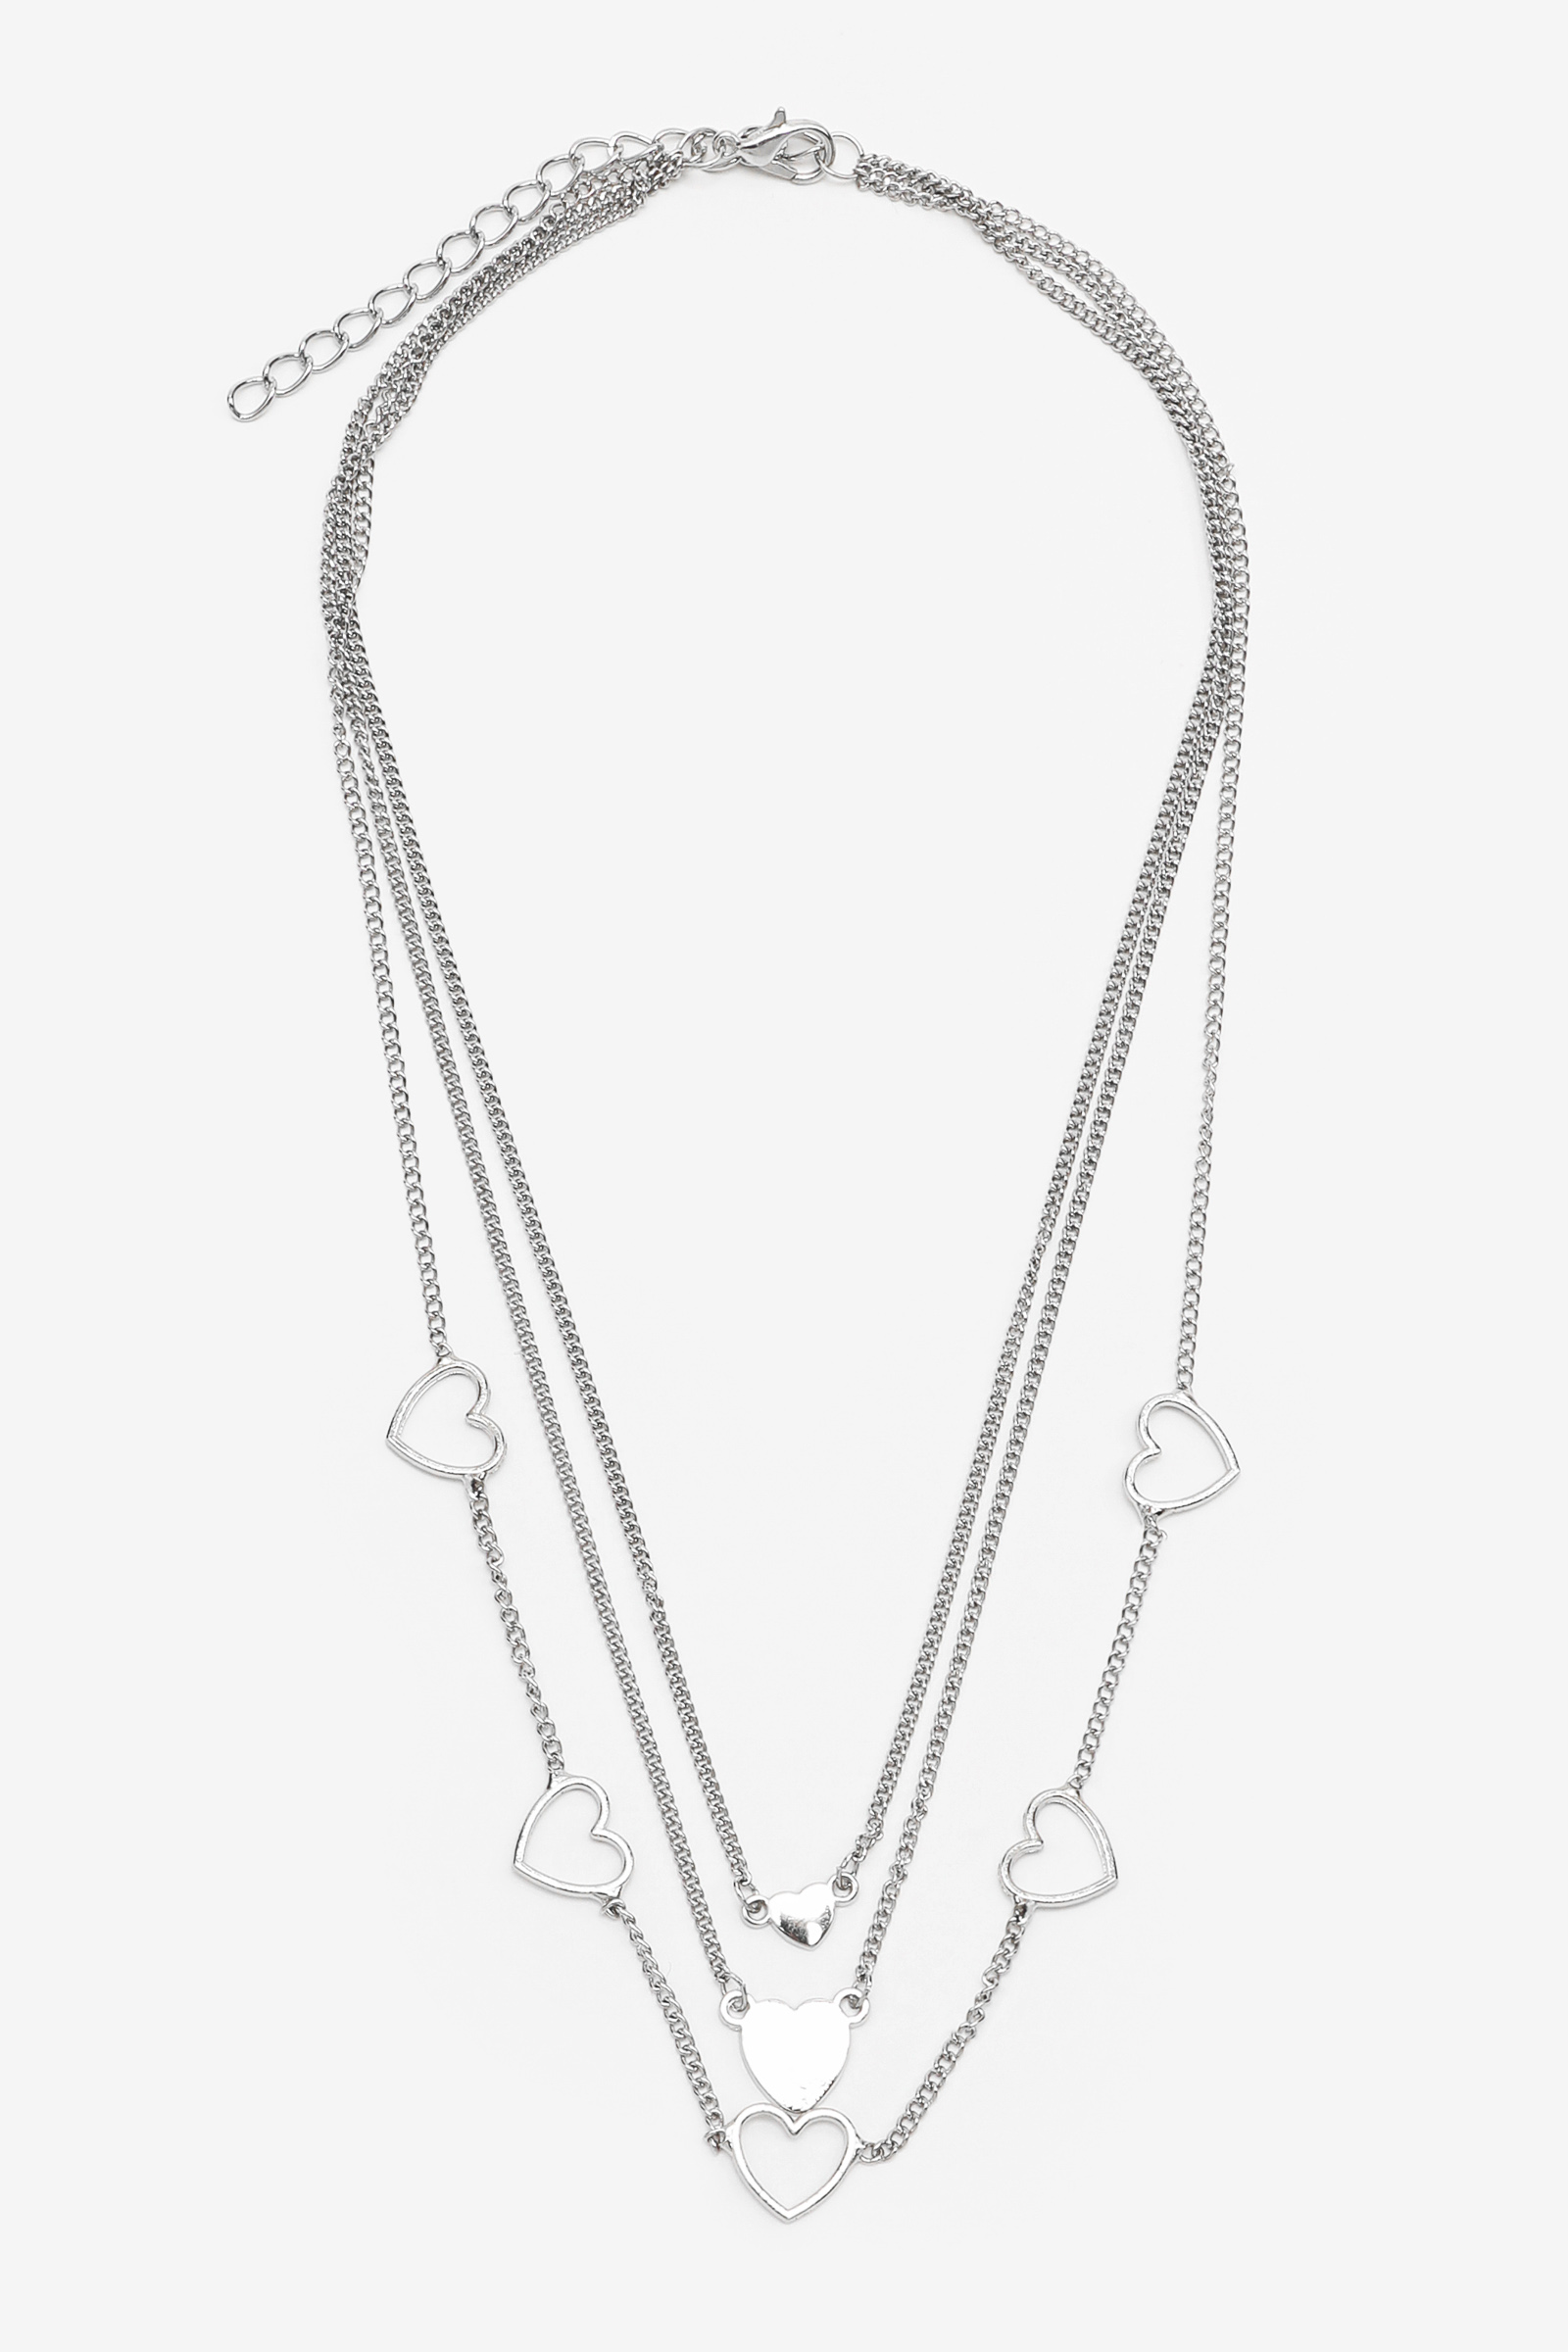 Ardene 3-Row Heart Charm Necklace in Silver